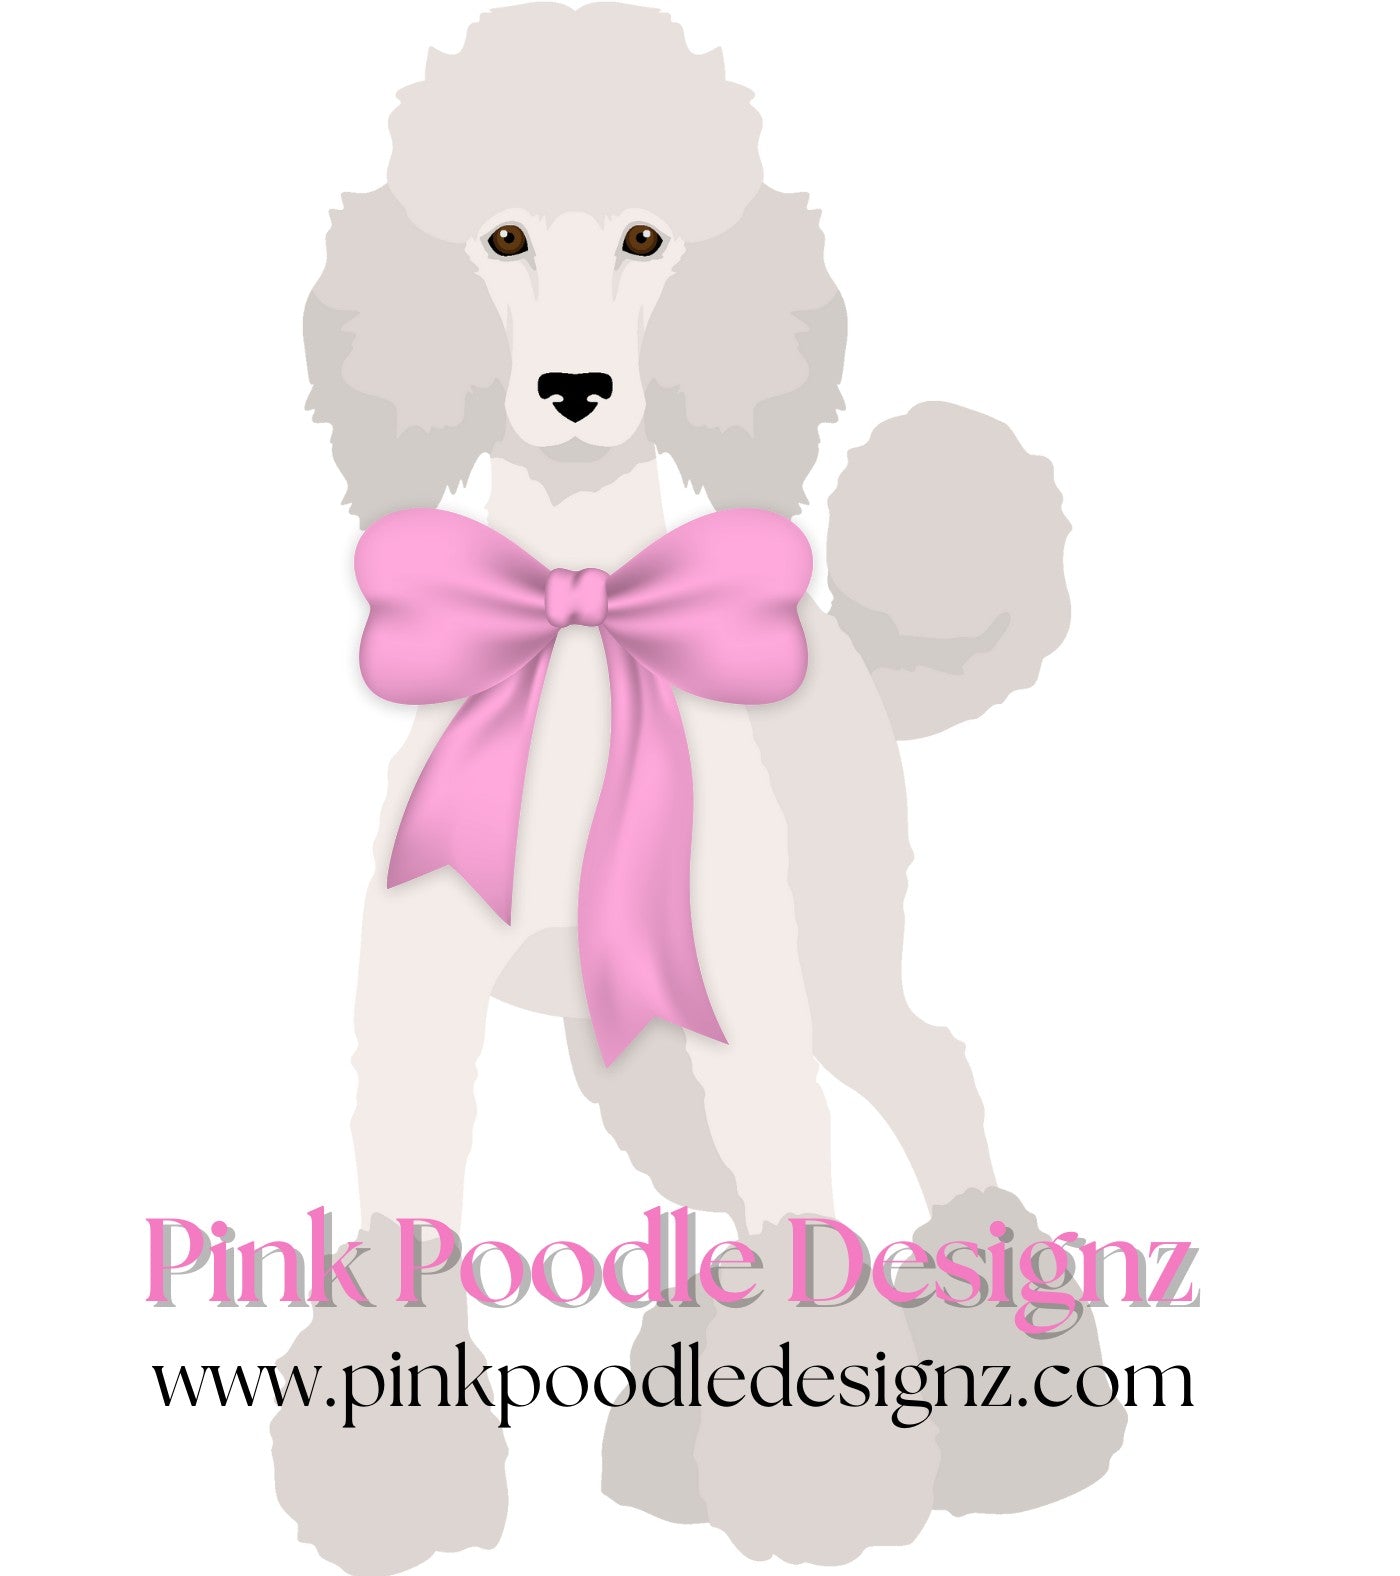 Embroidery Design 21K-30K Stitches Pink Poodle Designz